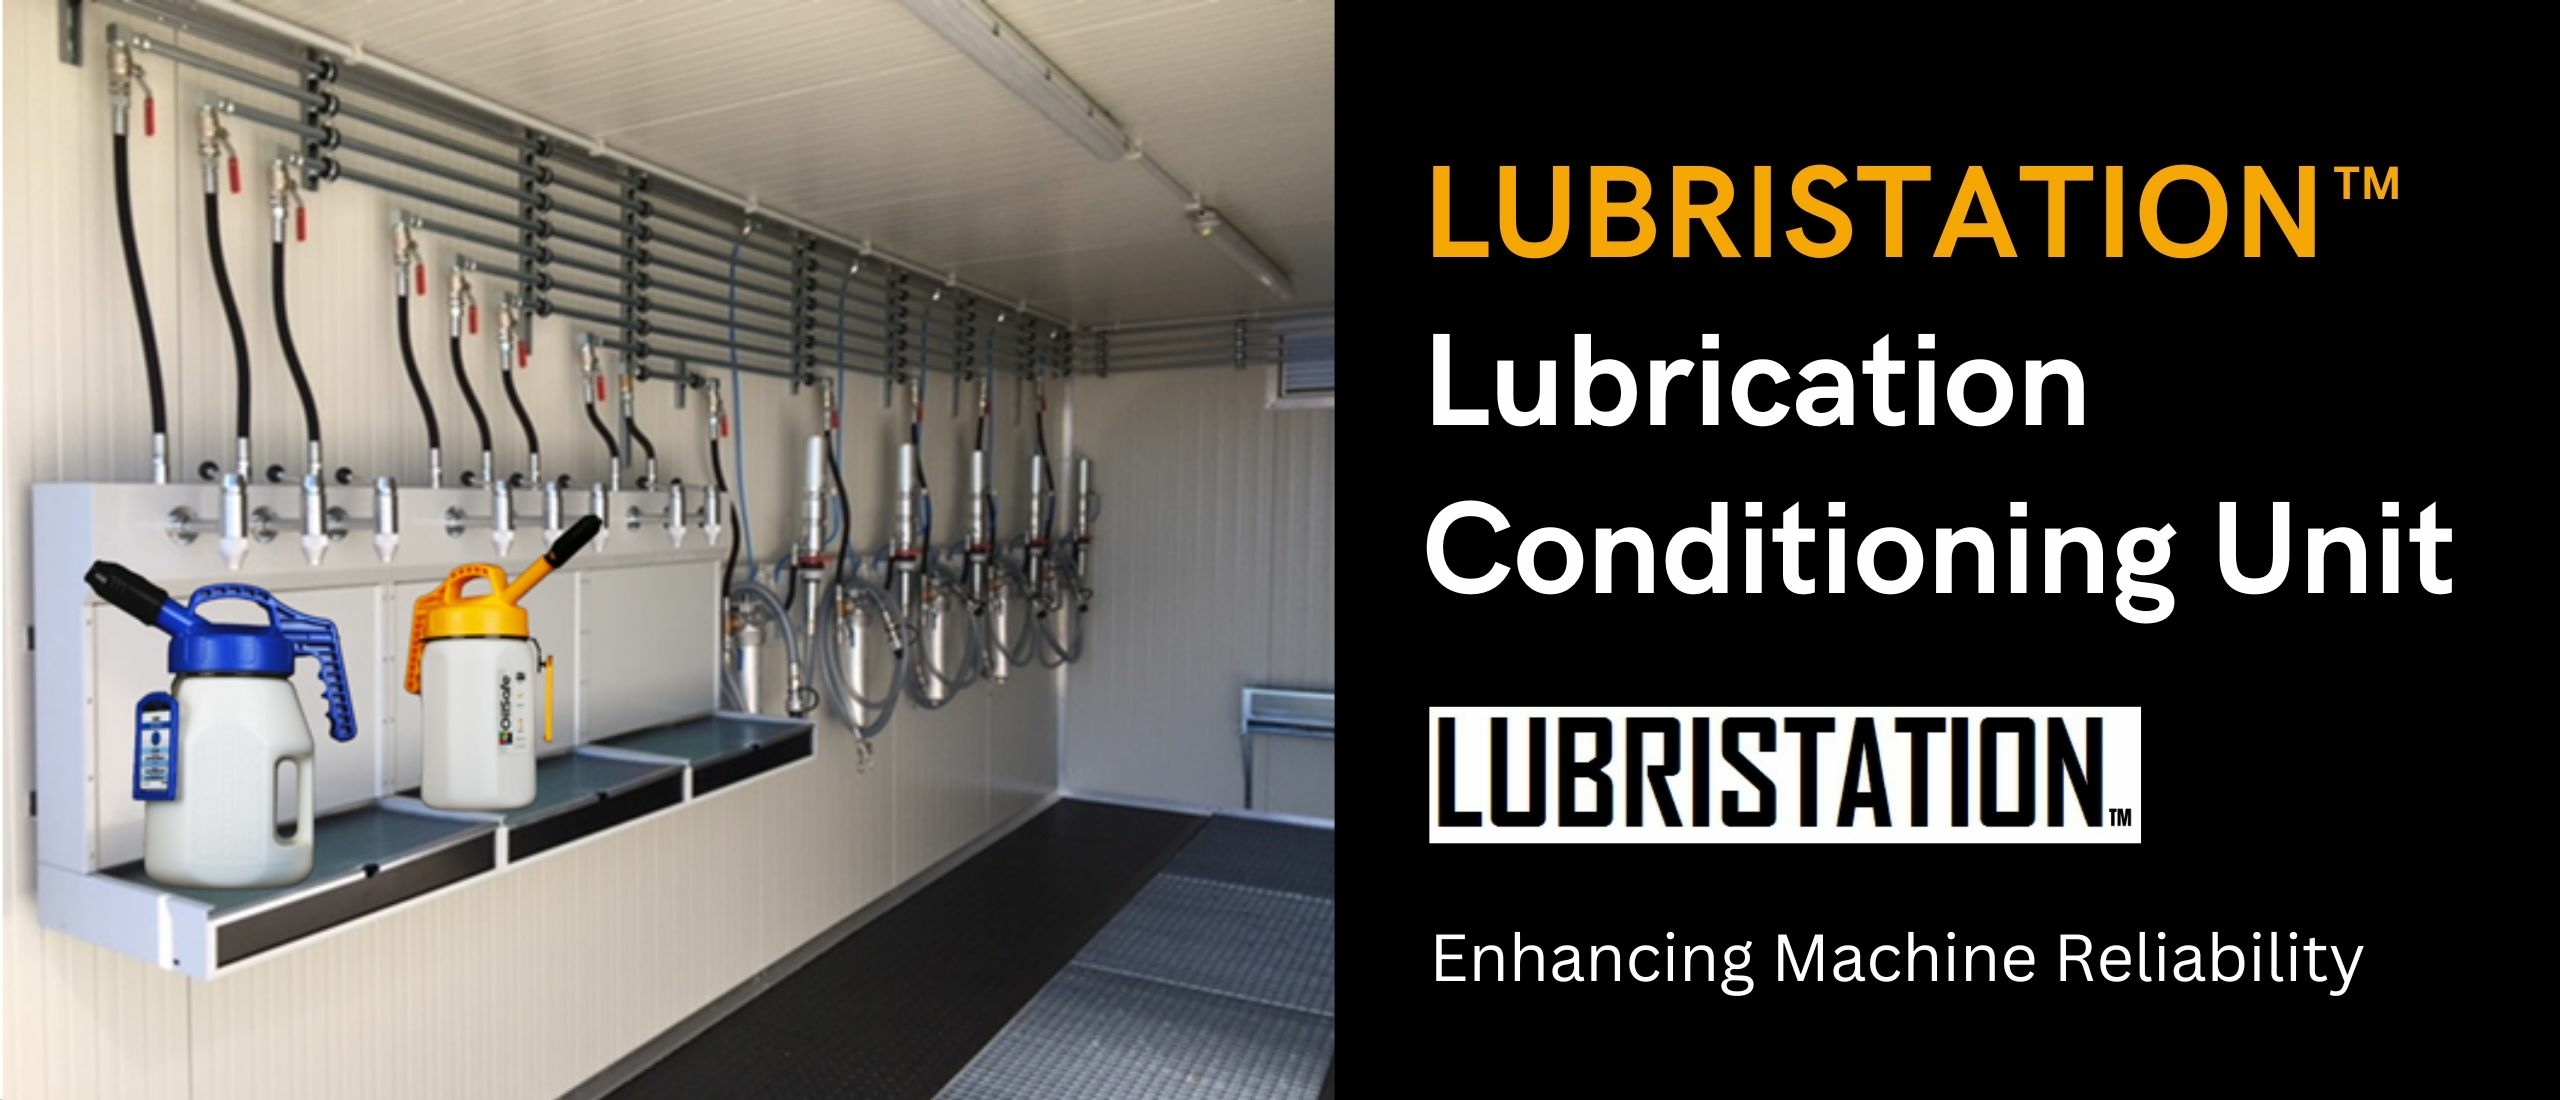 Lubrication Conditioning Unit: Enhancing Machine Reliability